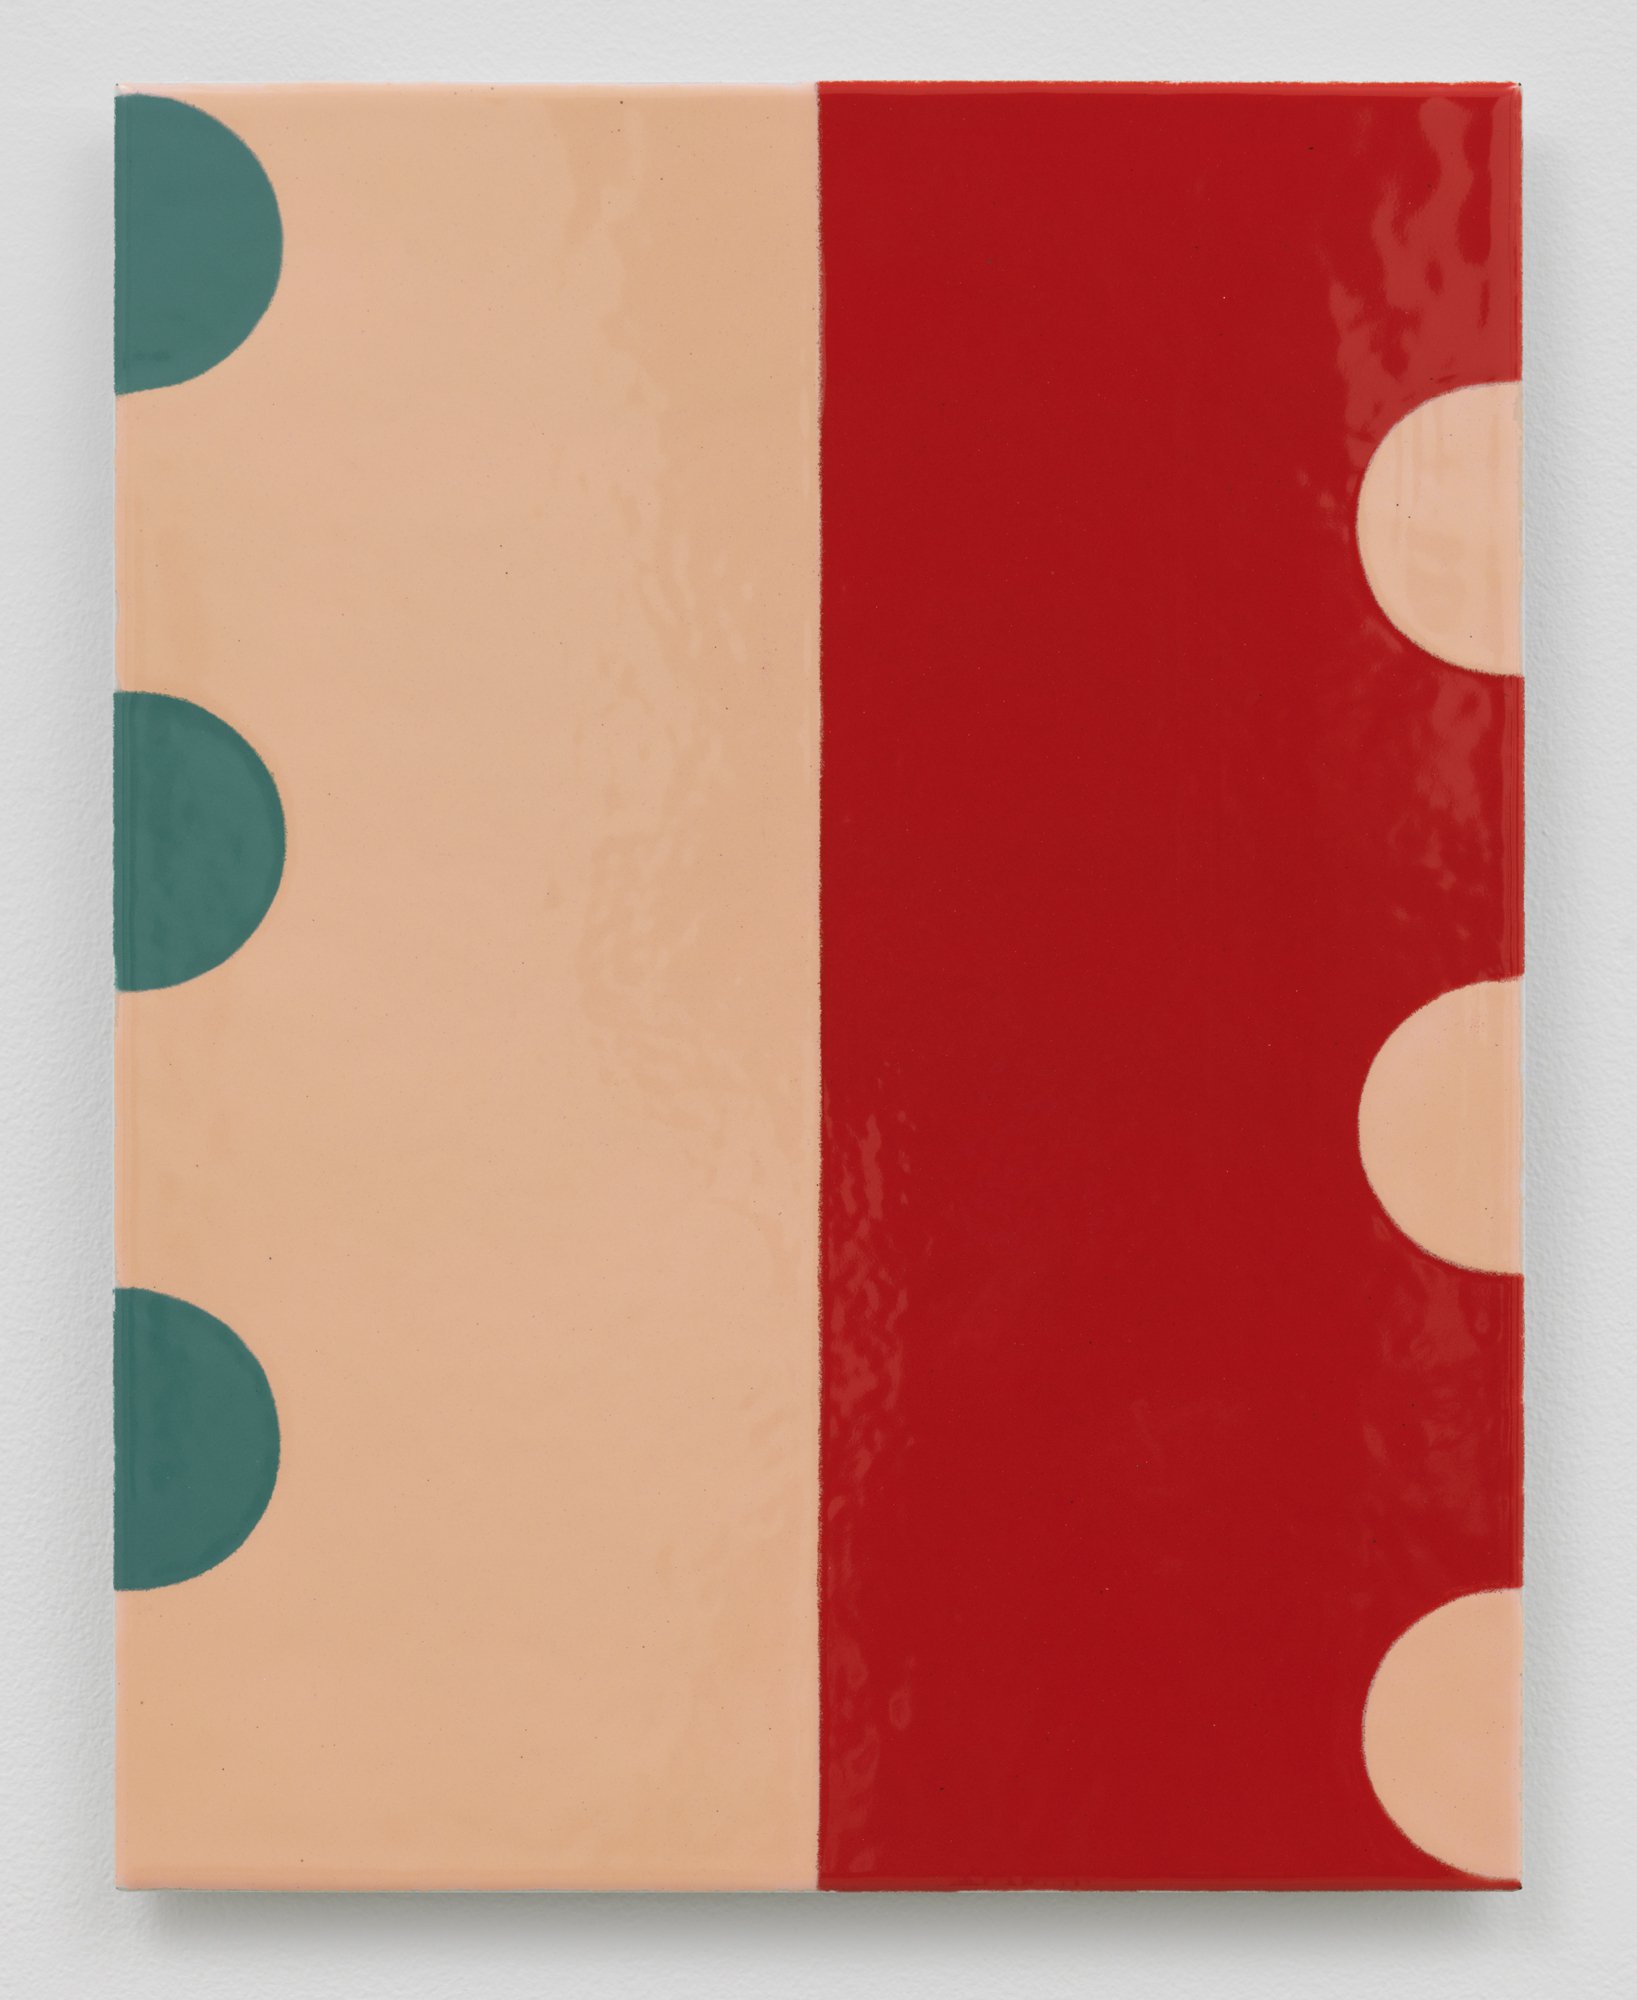 Ulrike Müller, Container, vitreous enamel on steel, 39.4 x 30.5 cm, 2019